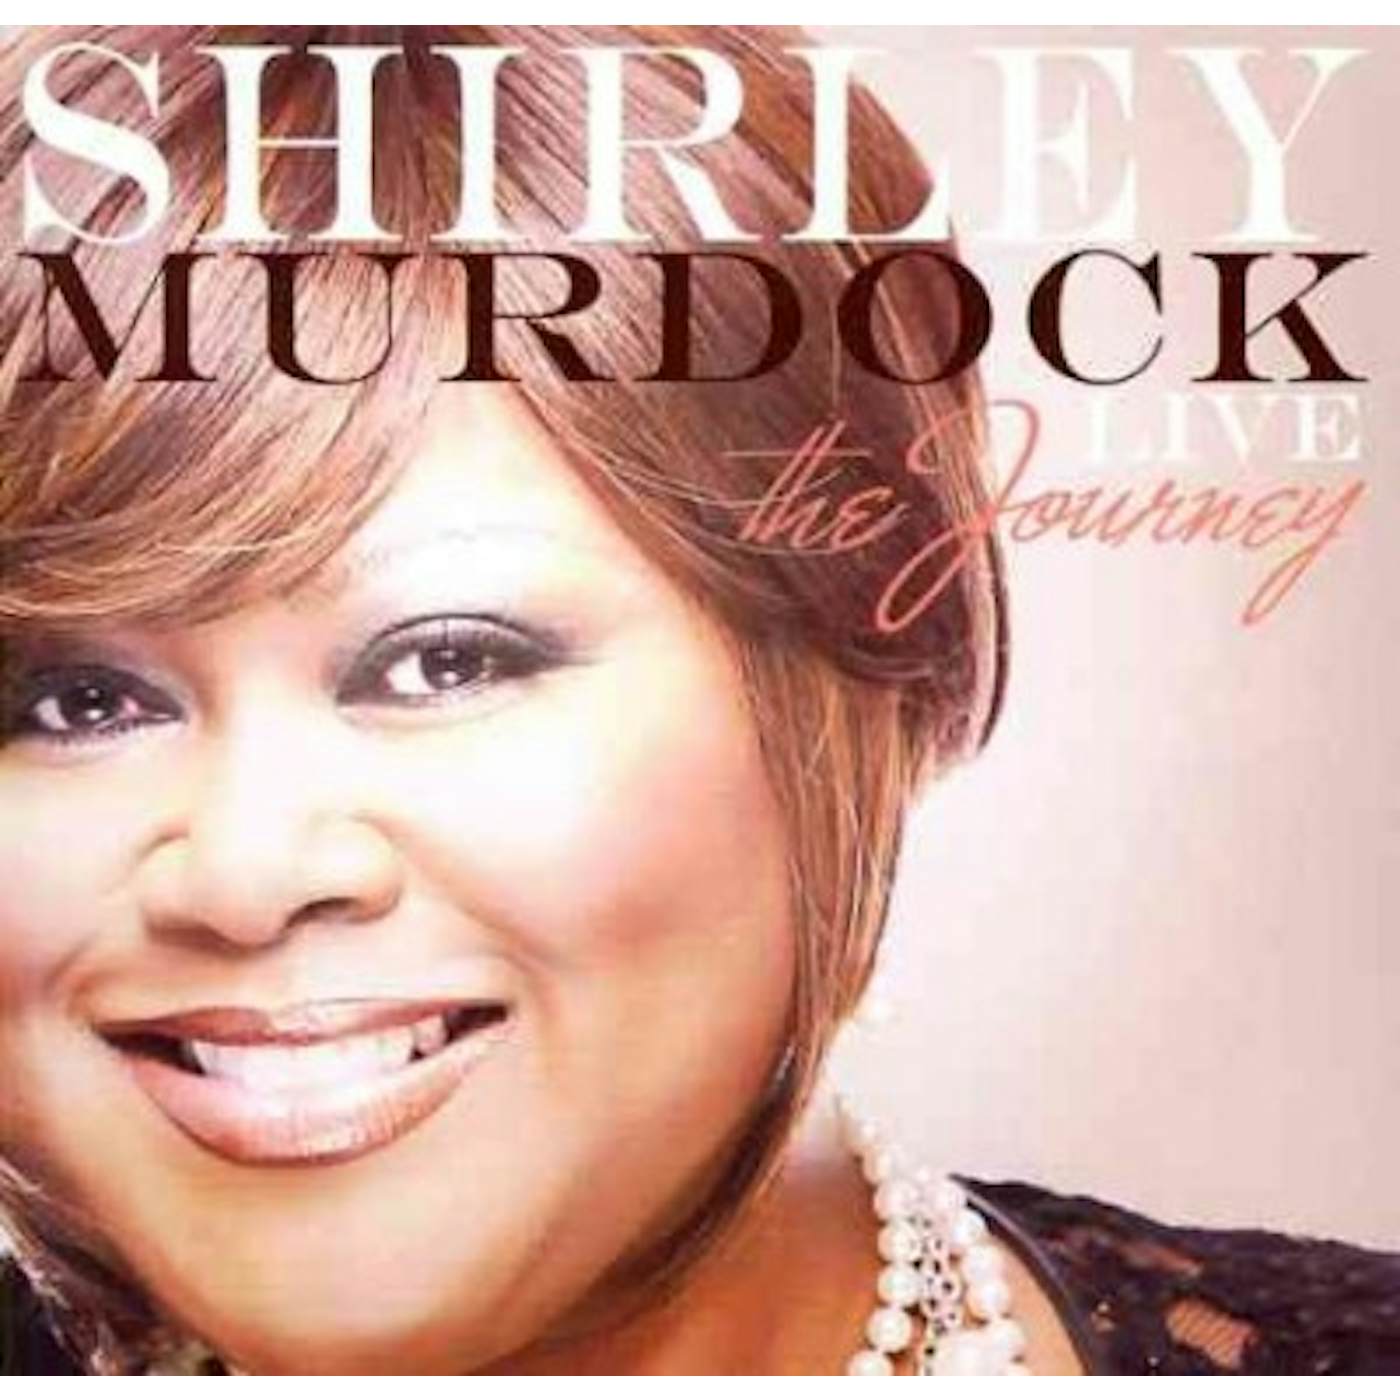 Shirley Murdock Live: The Journey CD